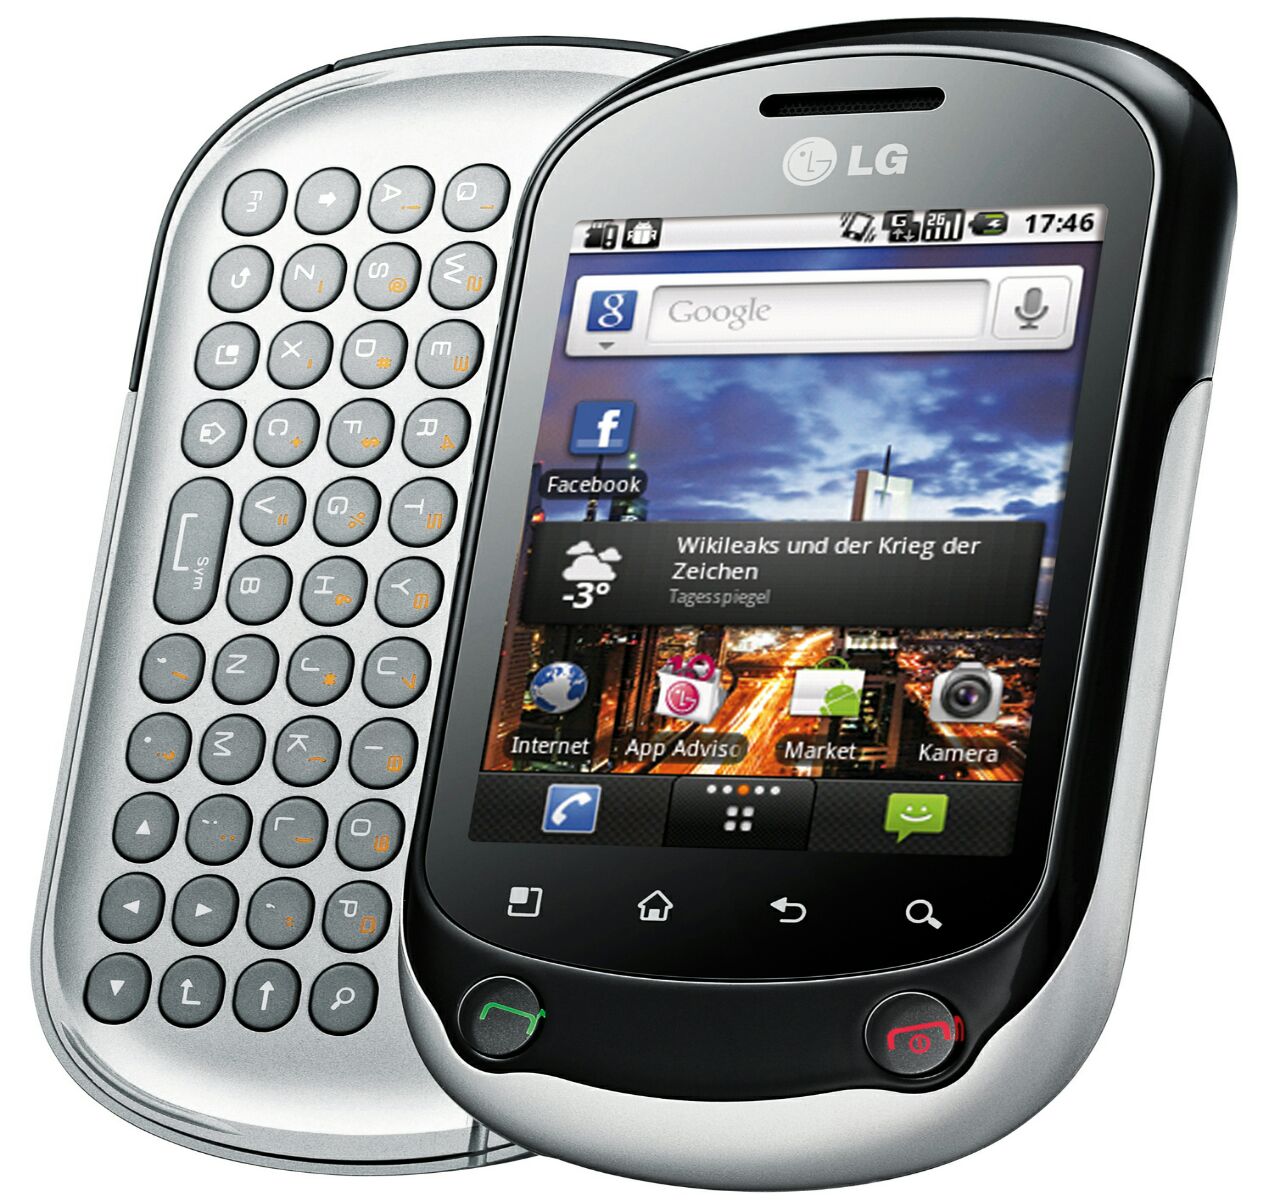 LG-Optimus-Chat-C550-675.jpg